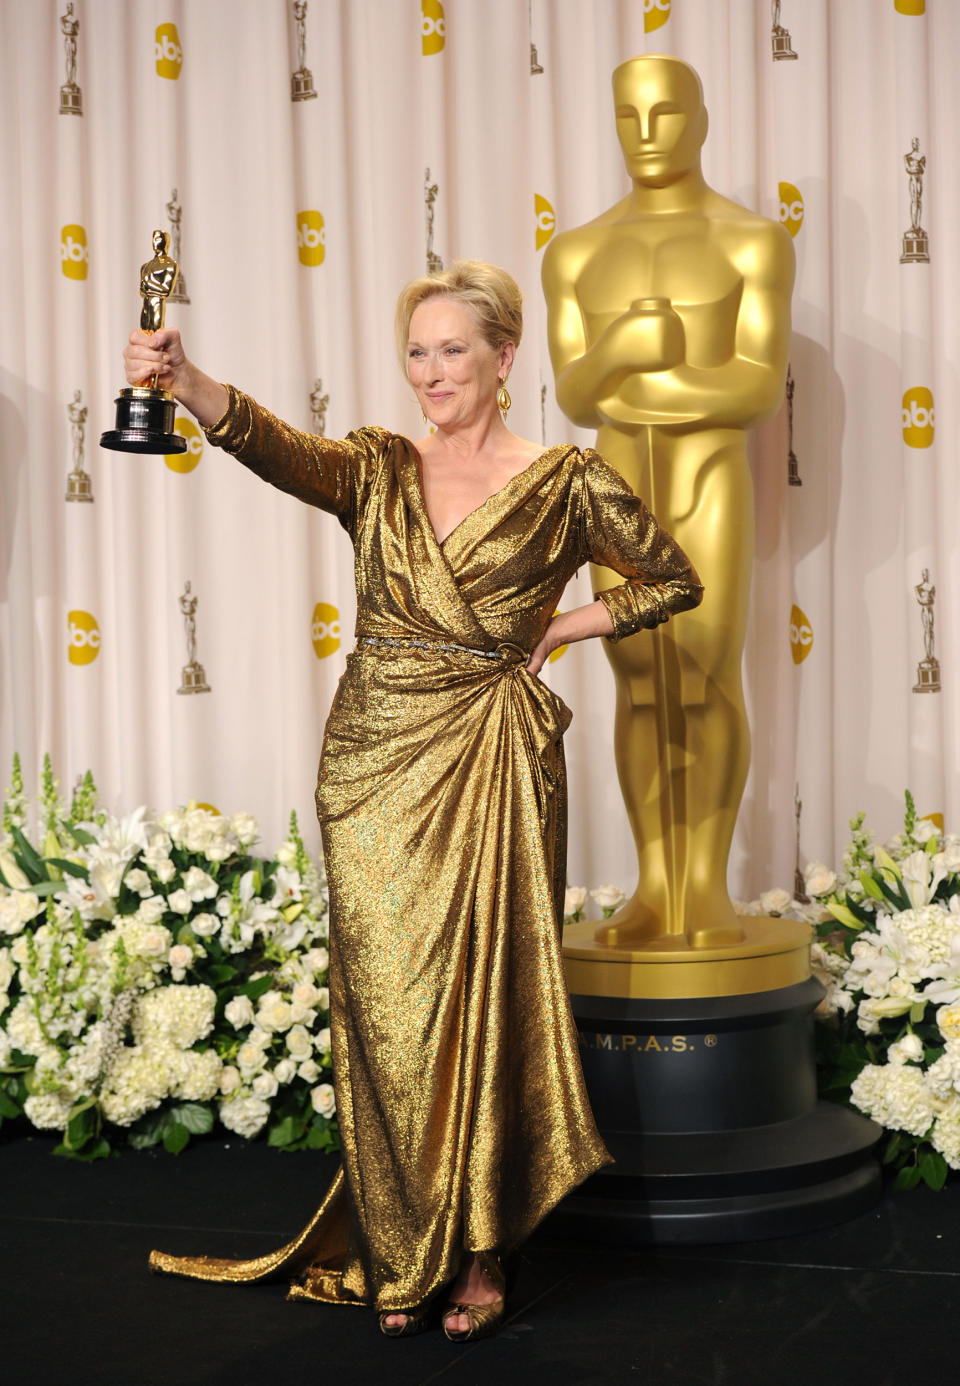 84th Annual Academy Awards - Press Room (Jason Merritt / TERM / Getty Images)